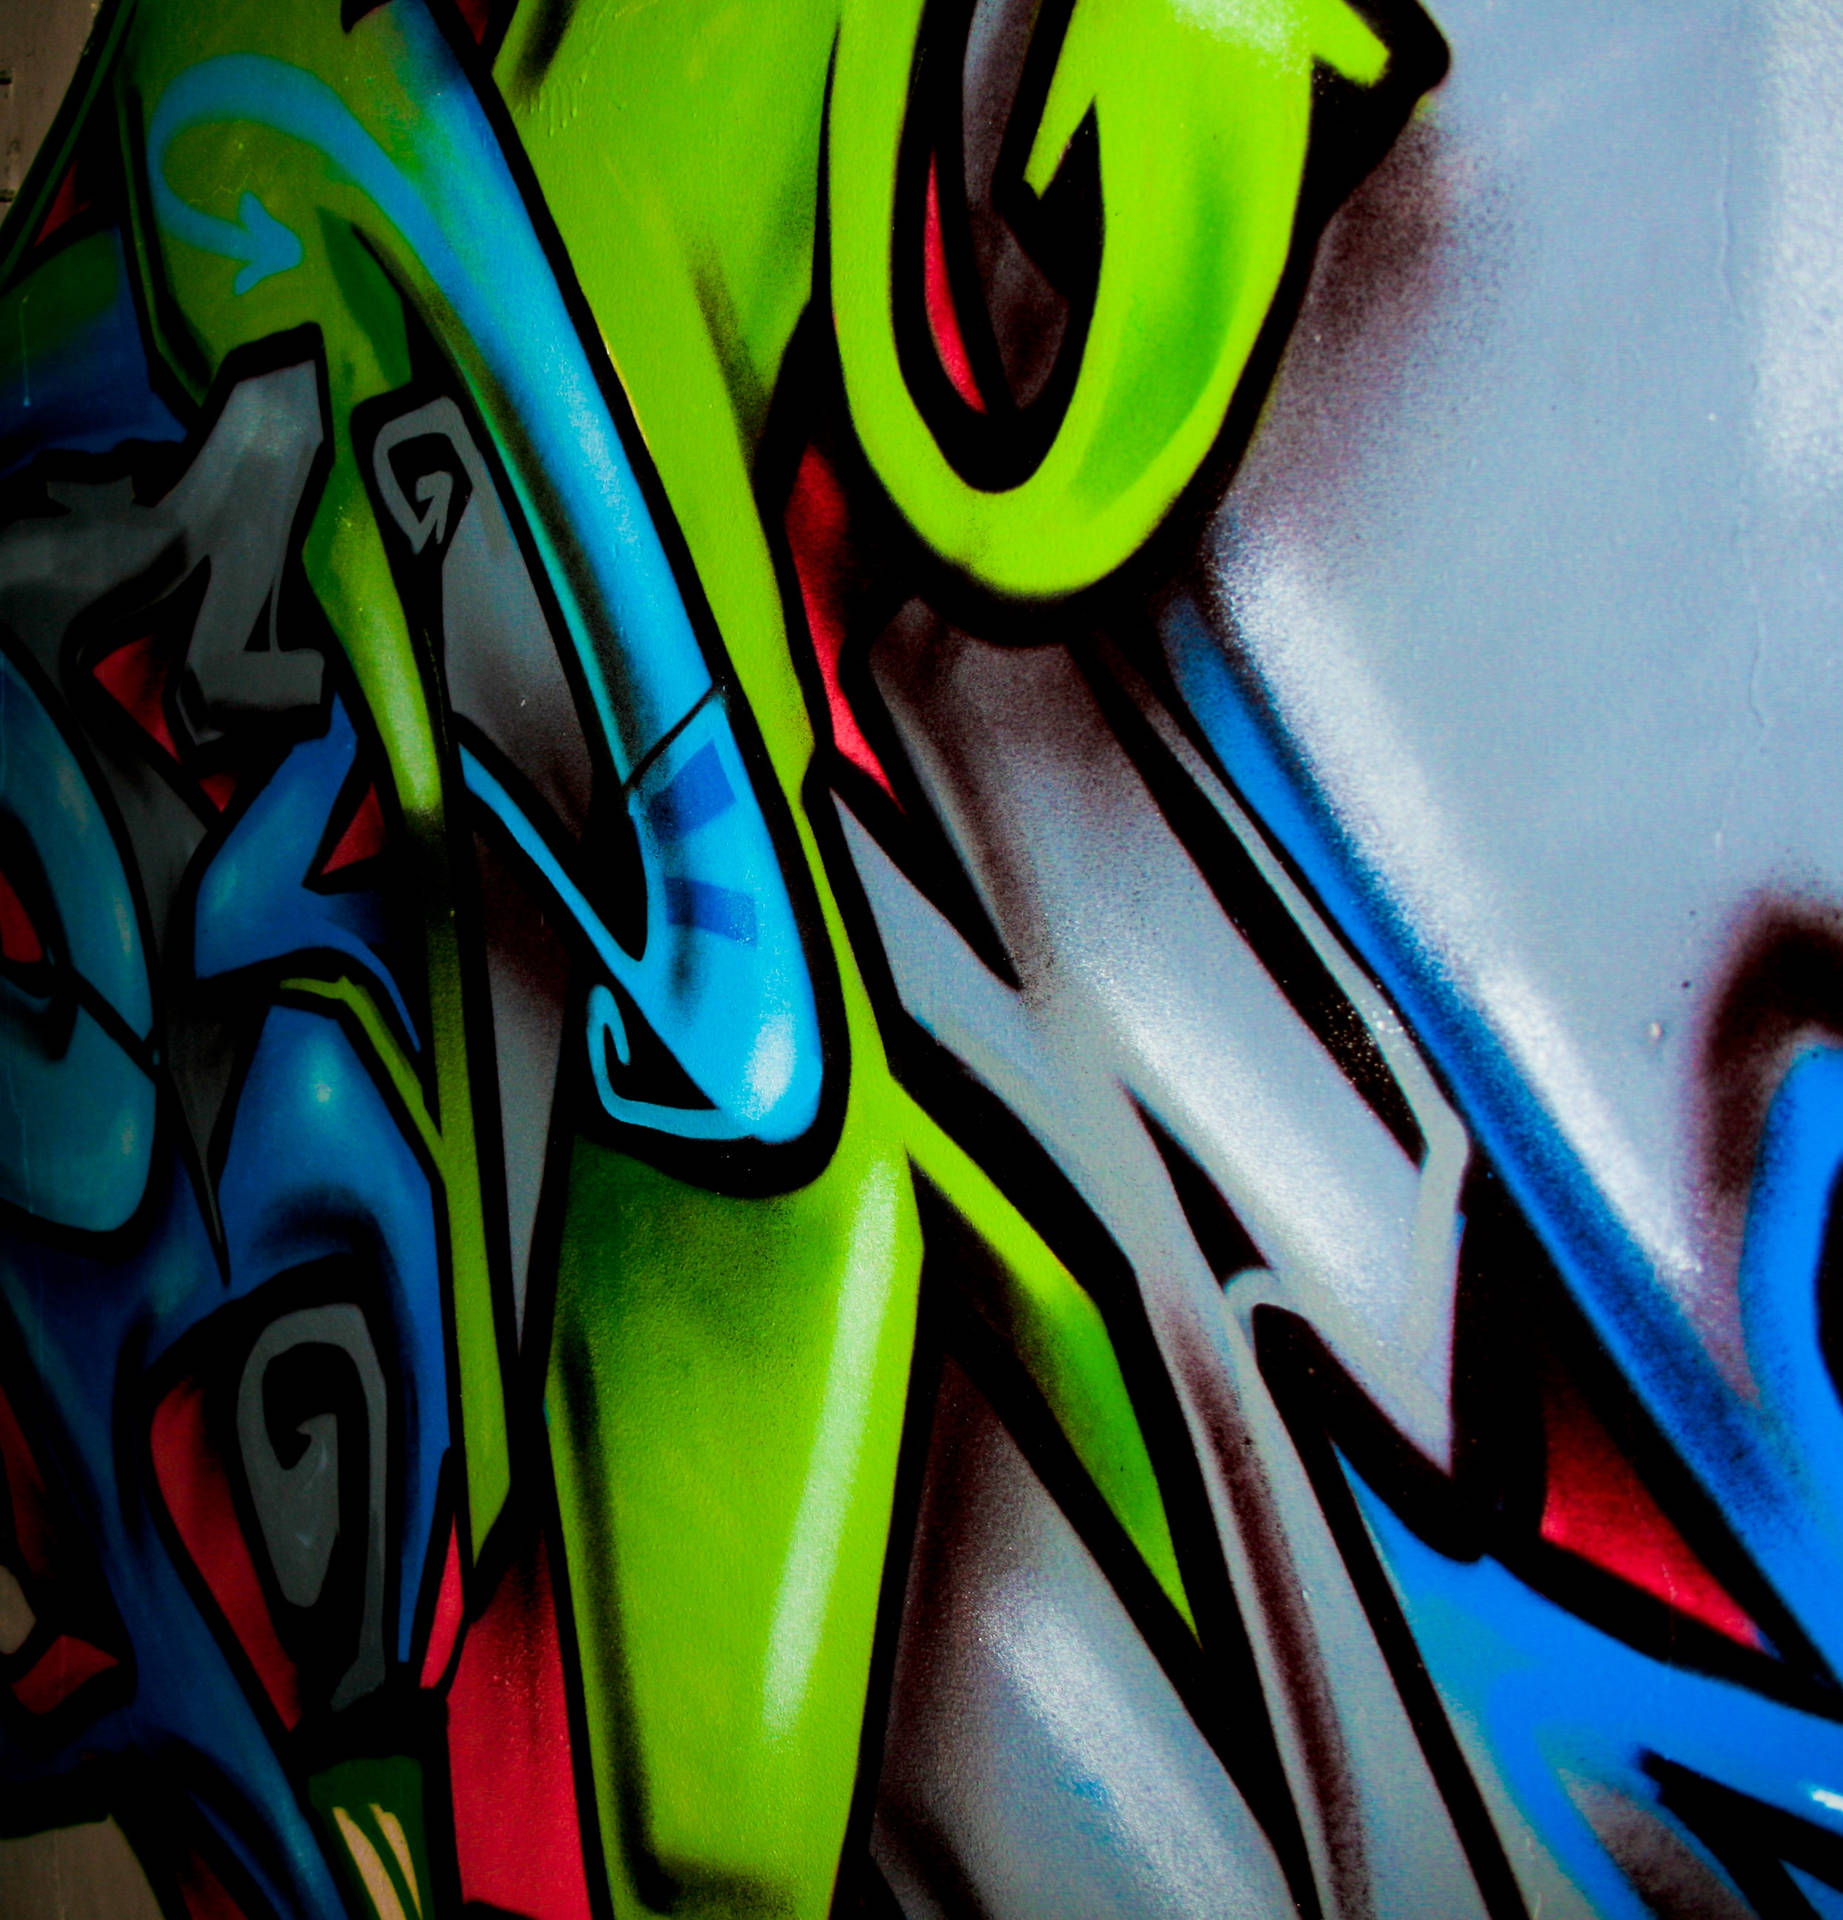 Graffiti 2482X2586 Wallpaper and Background Image